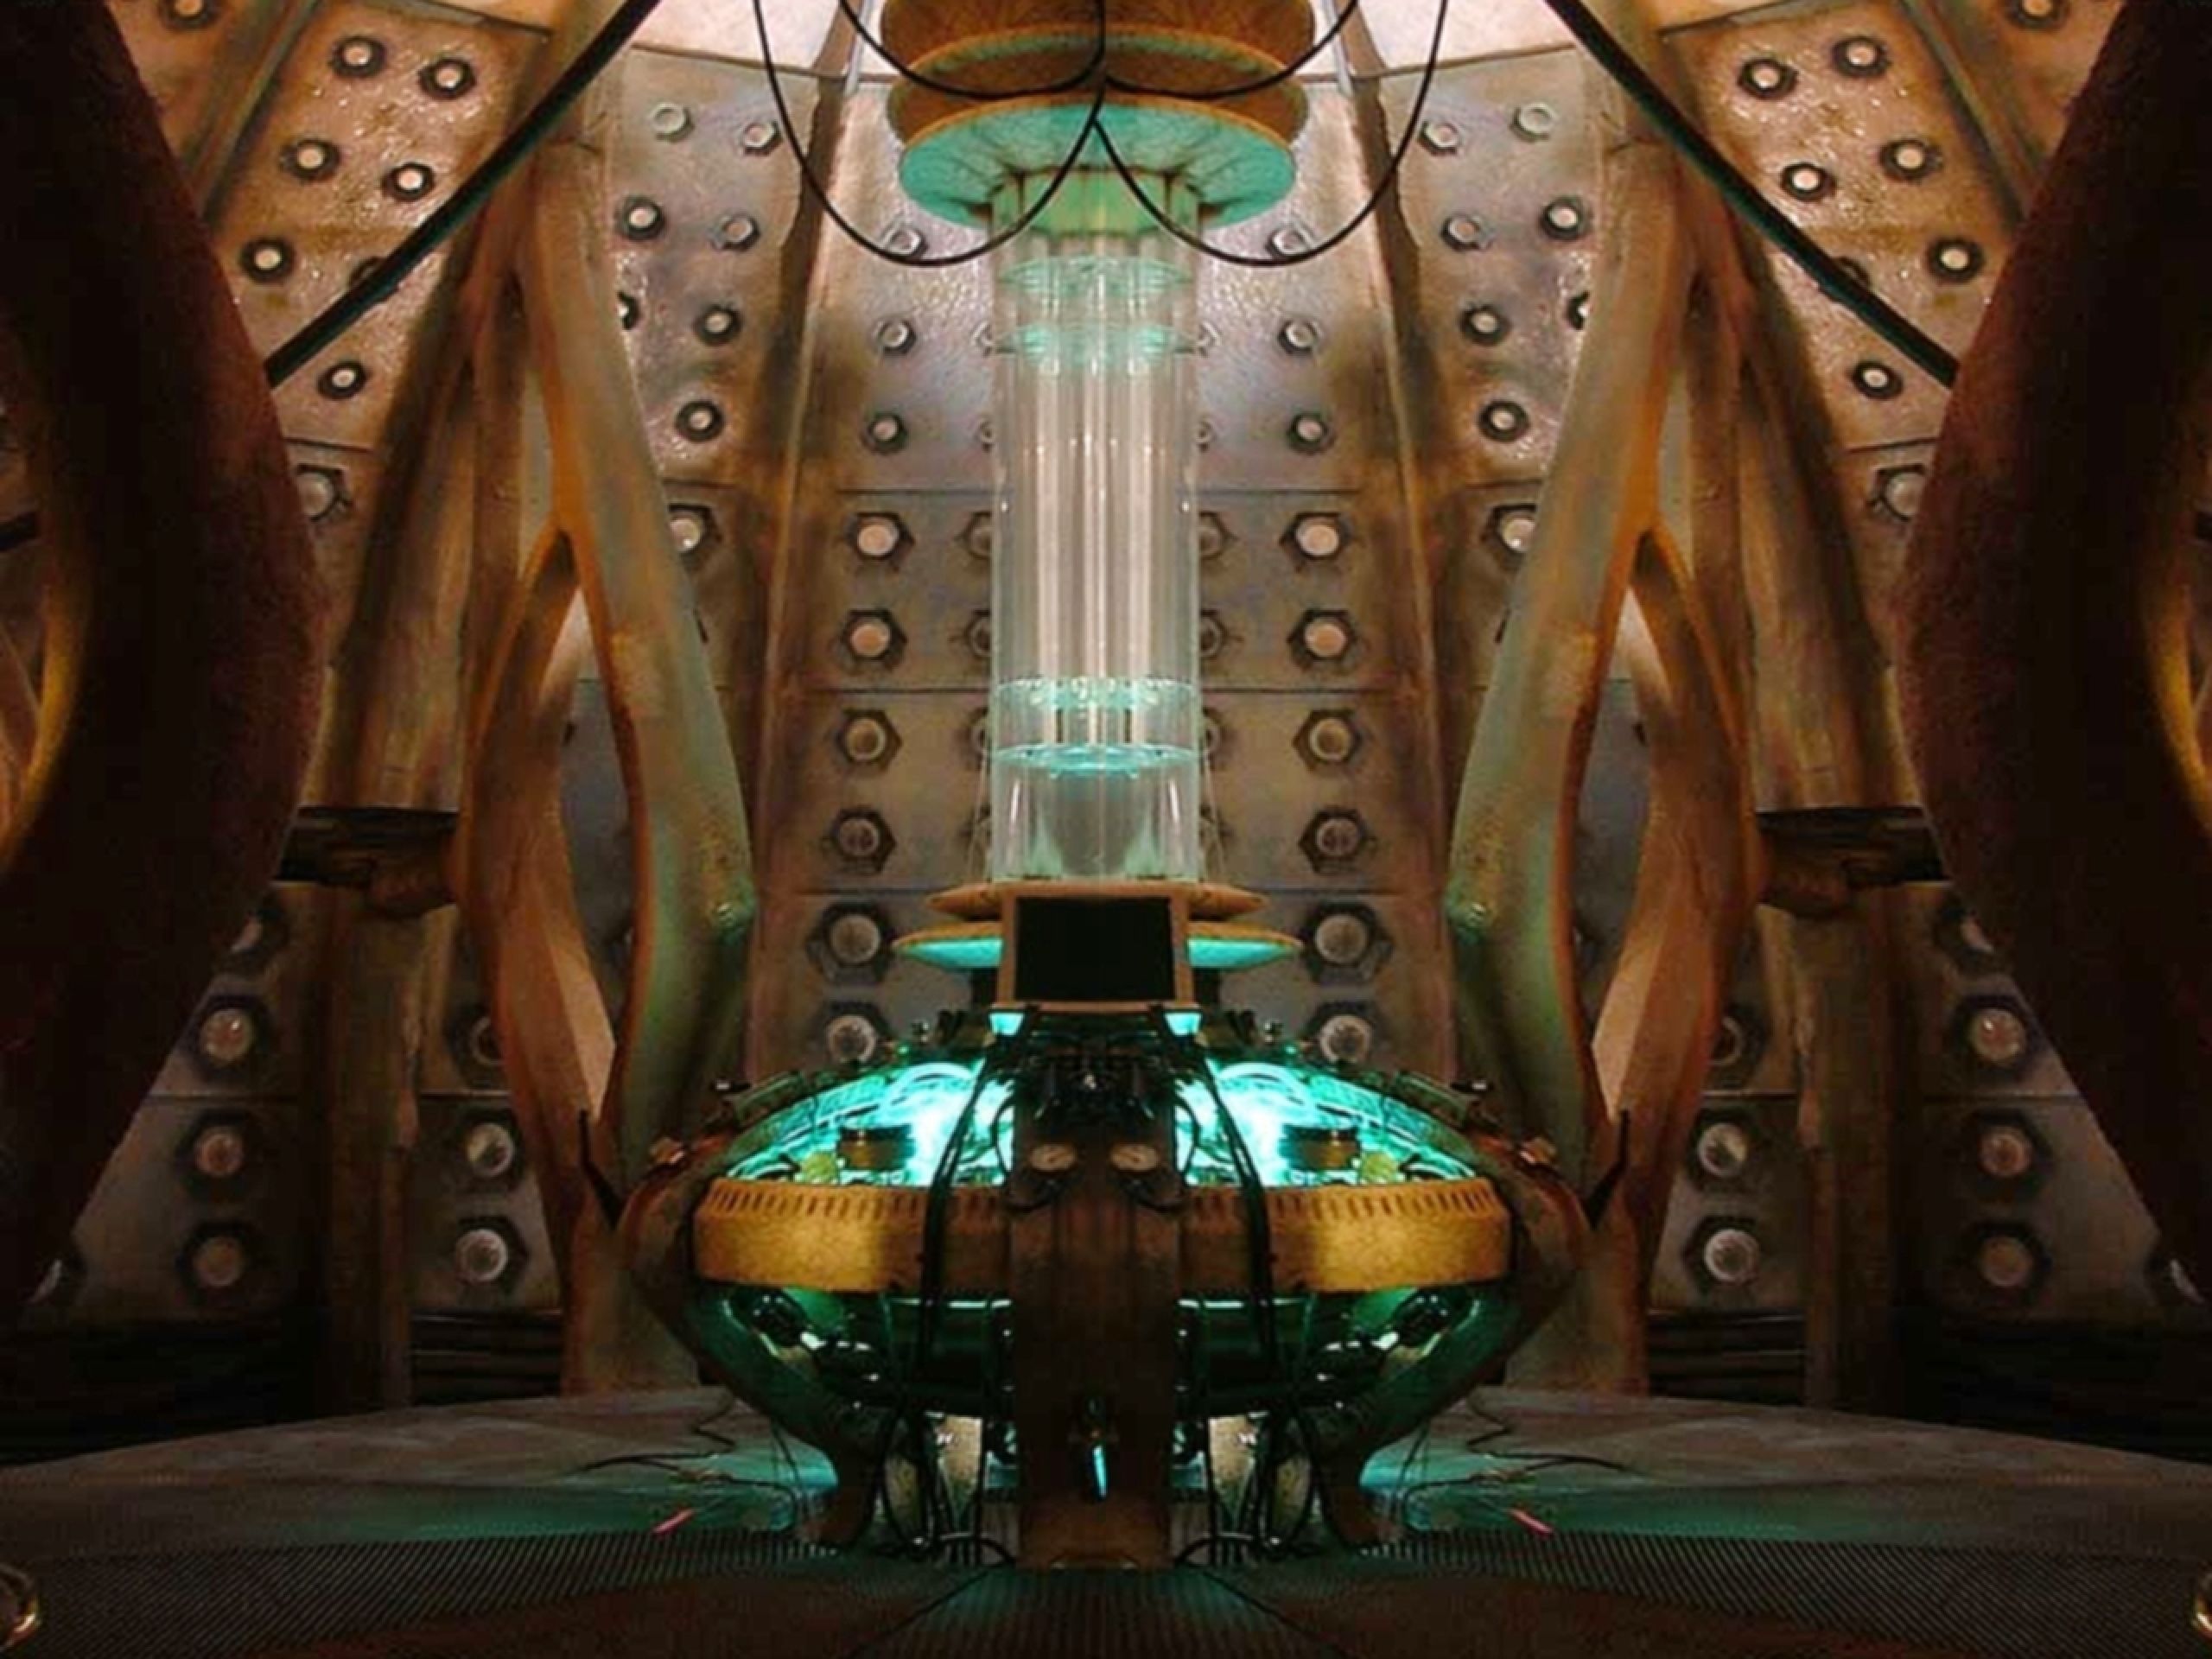 Doctor Who All TARDIS Consolesx1920 tardis doctor who tardis control room 1280x960 wallpaper Art. Doctor who wallpaper, Doctor who tardis, 10th doctor